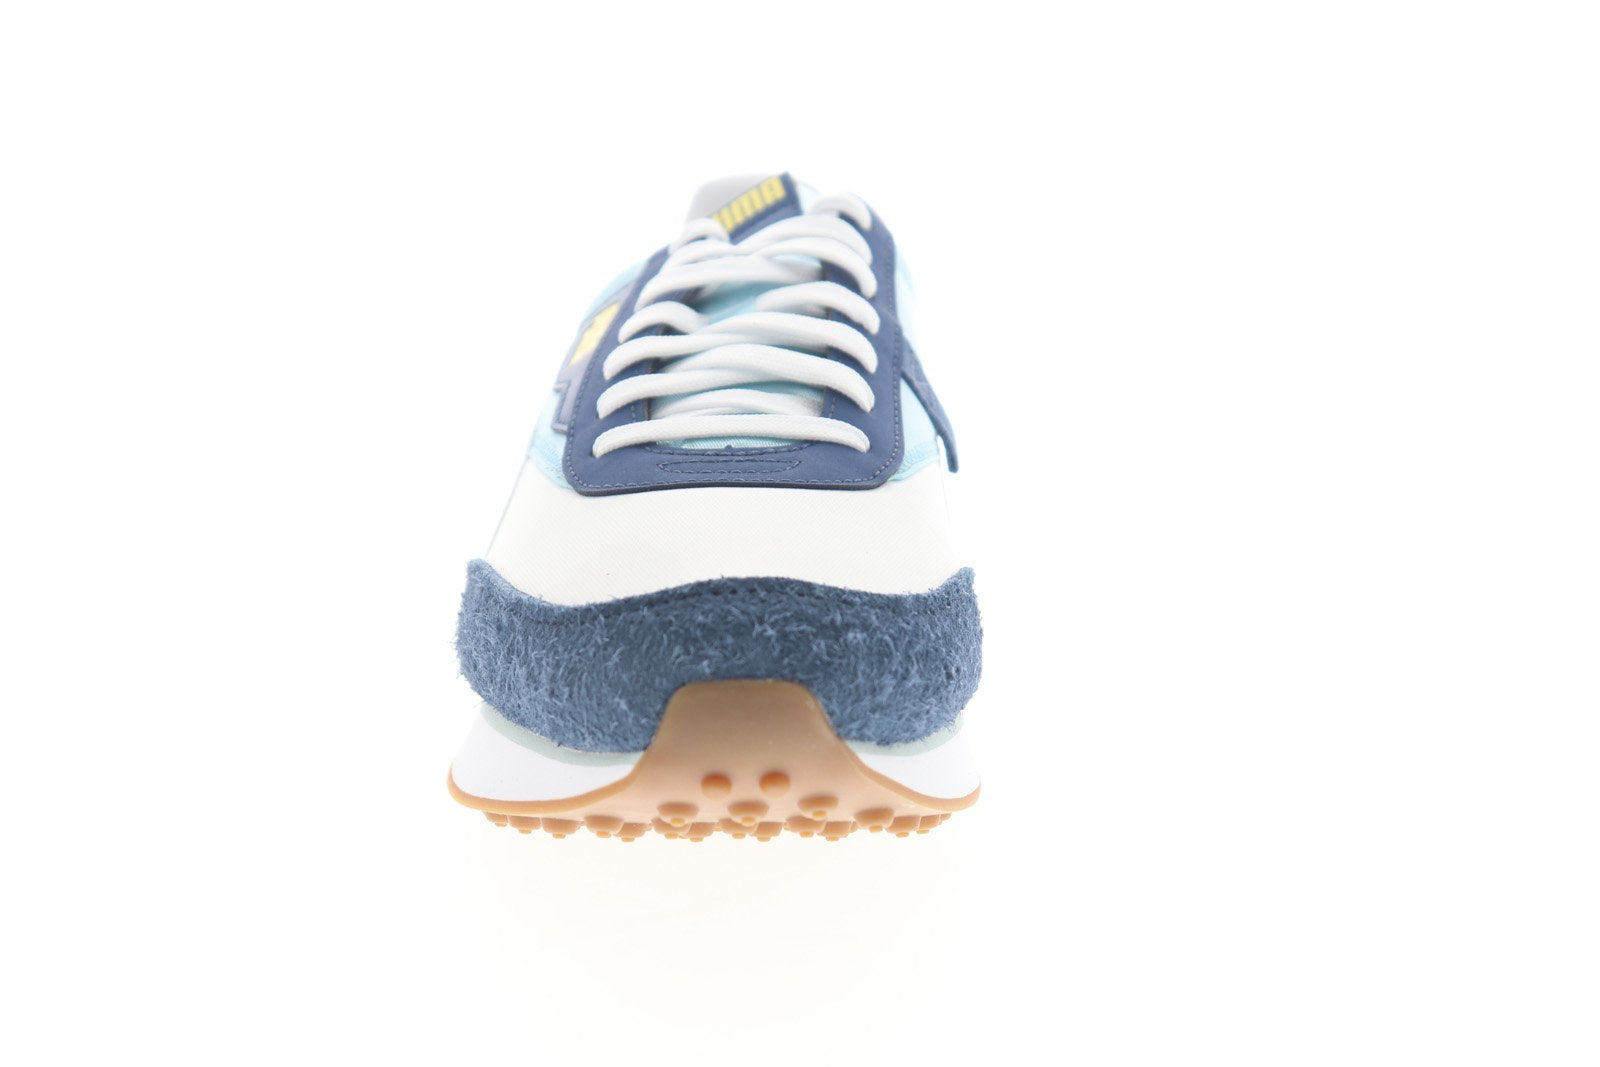 OPUEA' 101ZR Sneakers Blue / EU37 Women